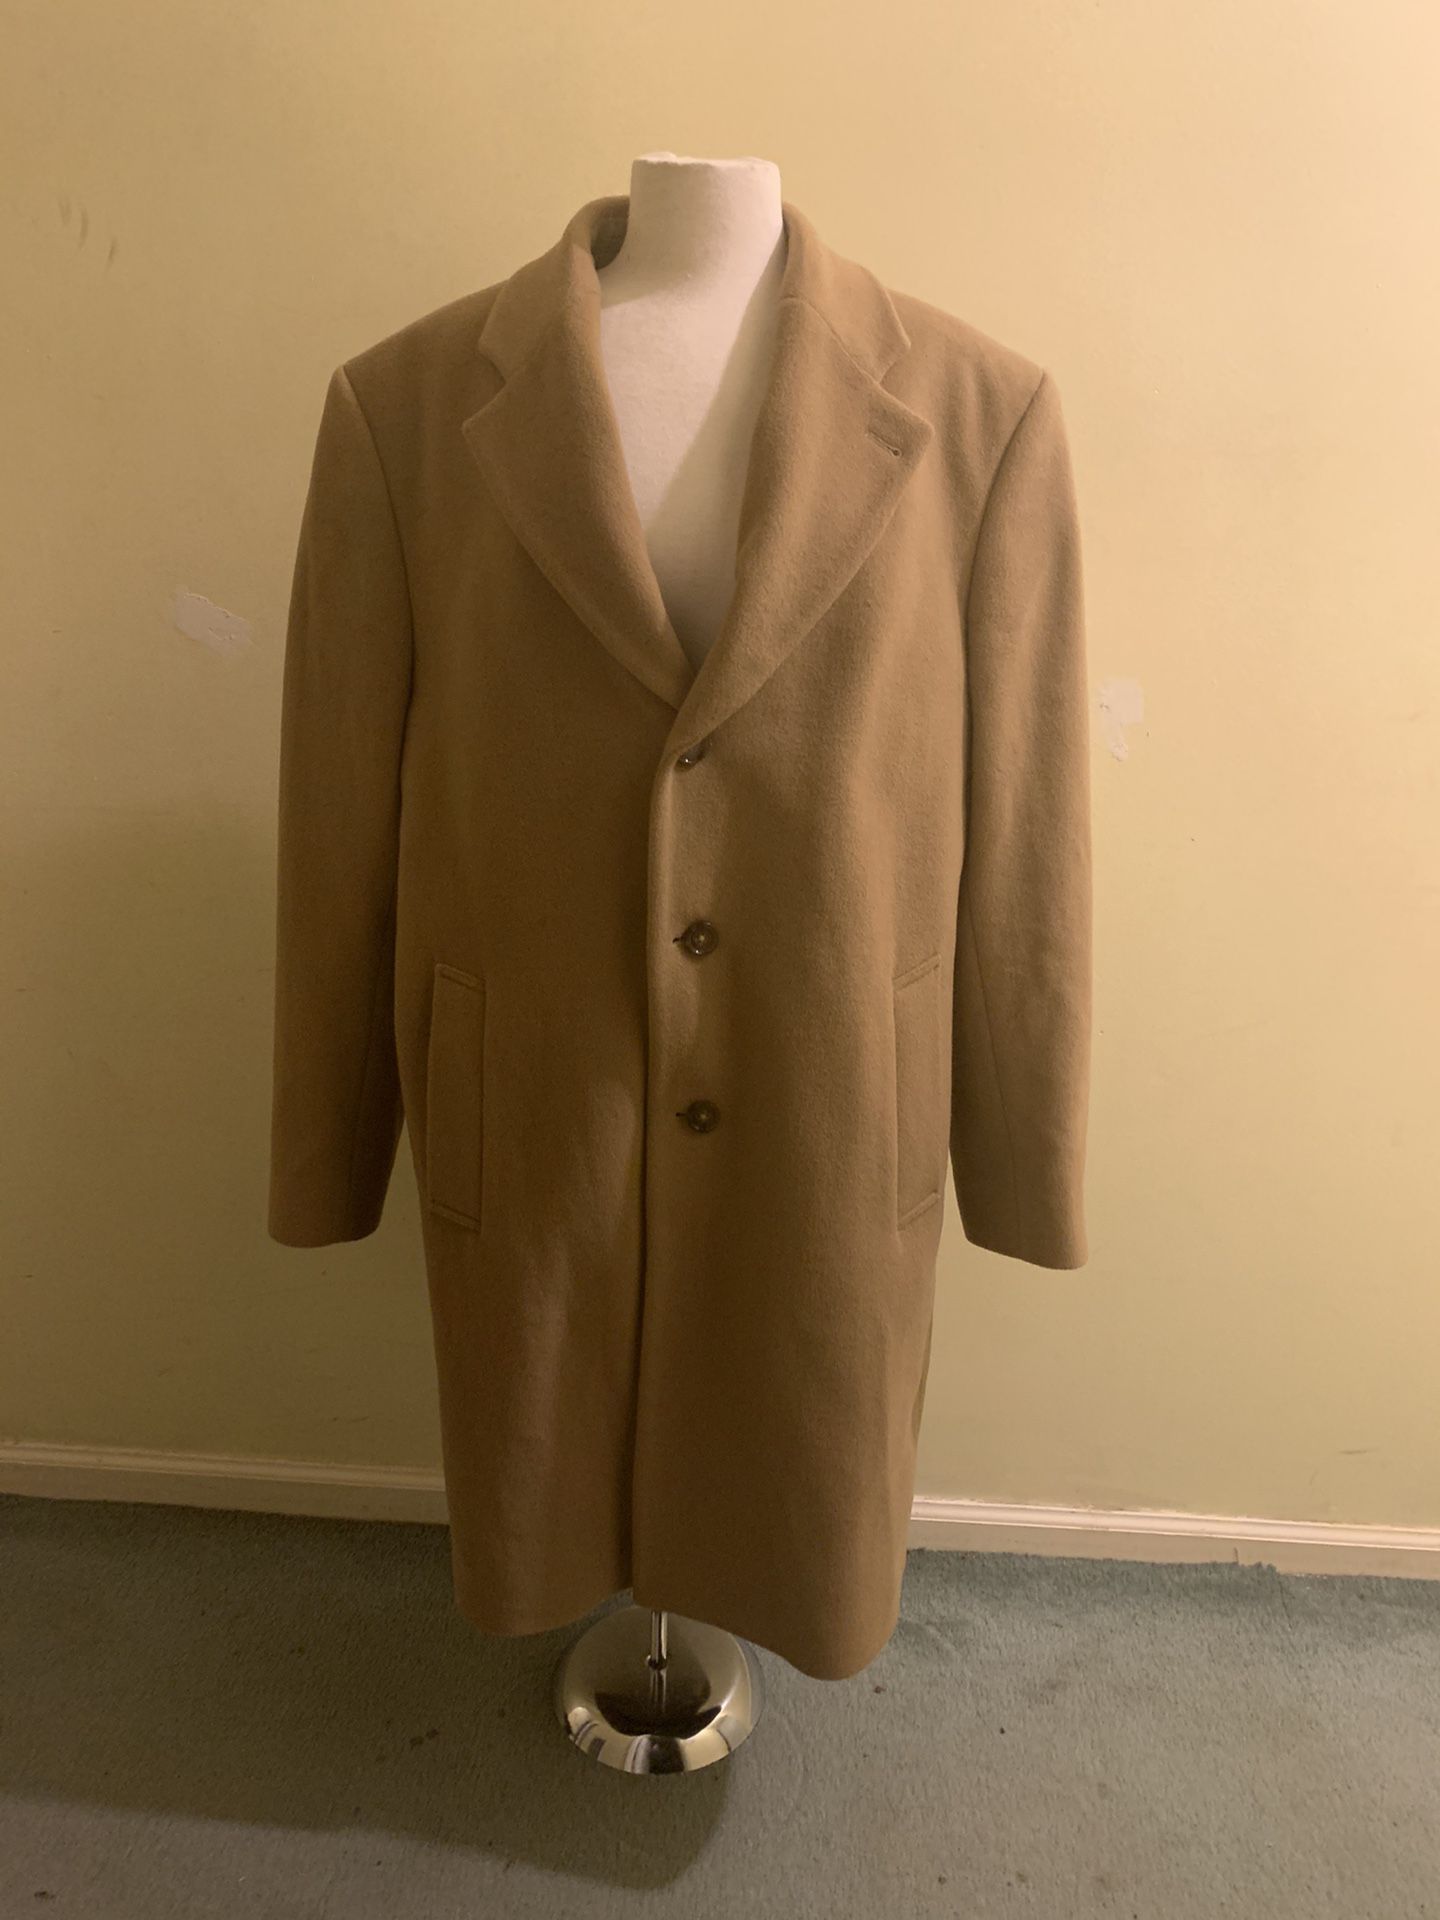 Men’s Michael Kors Coat (size 44R)